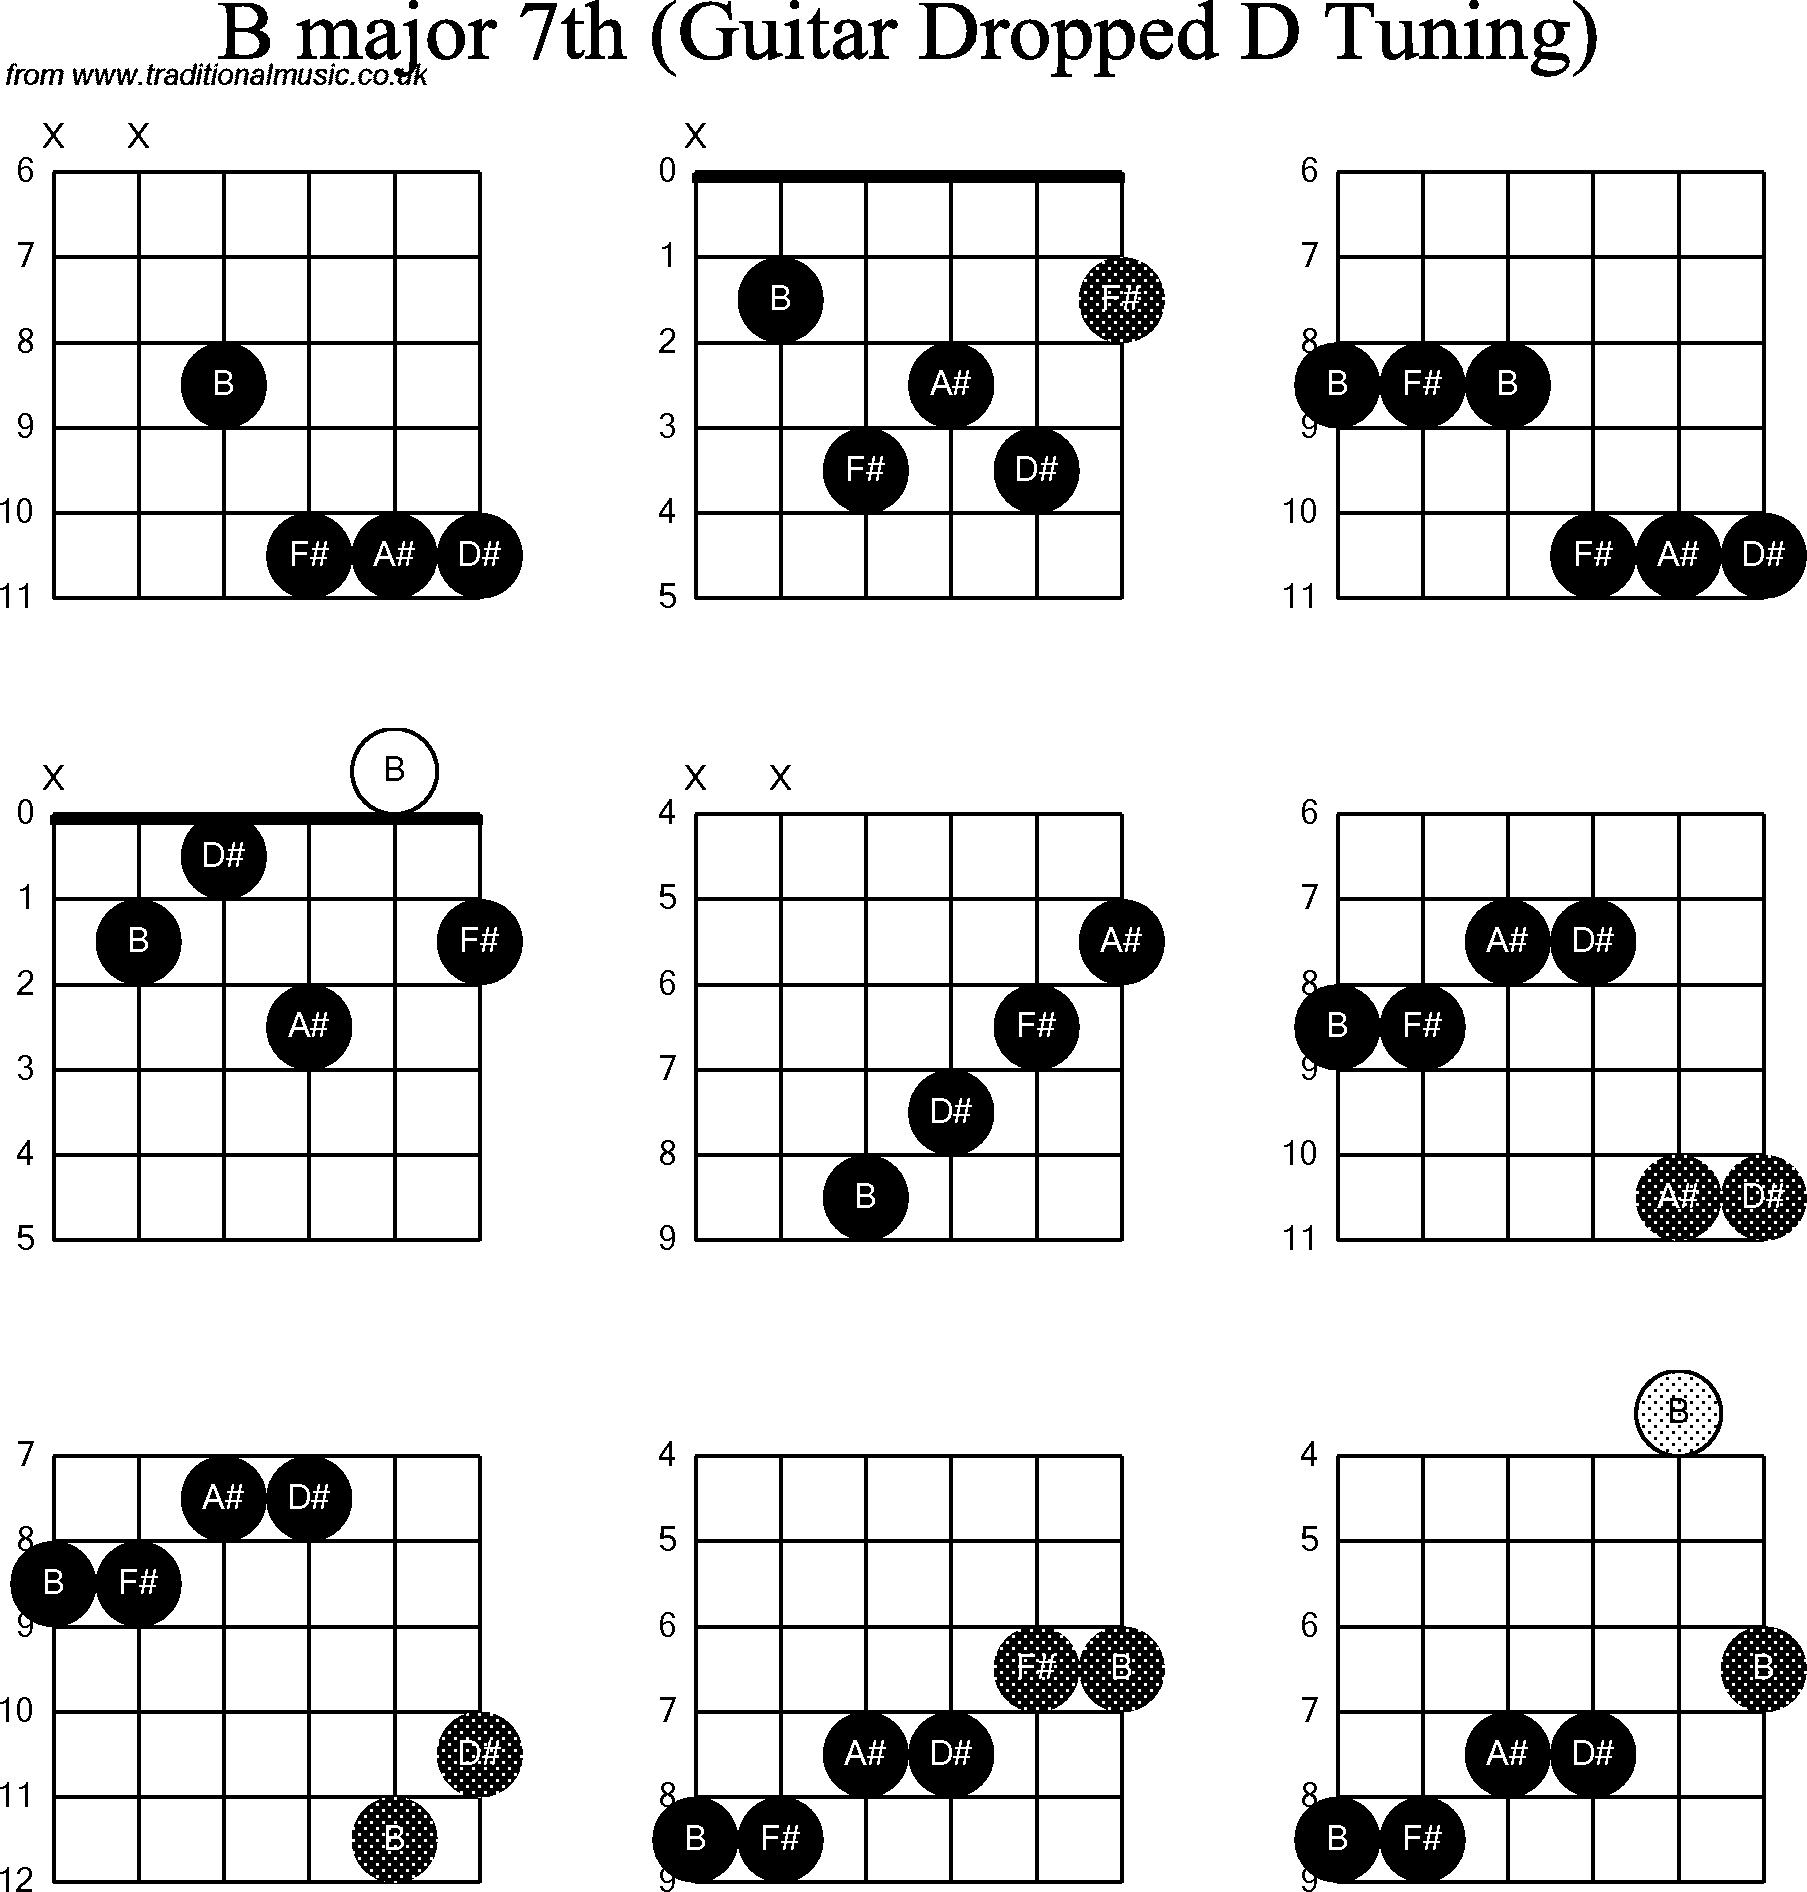 Chord diagrams for dropped D Guitar(DADGBE), B Major7th